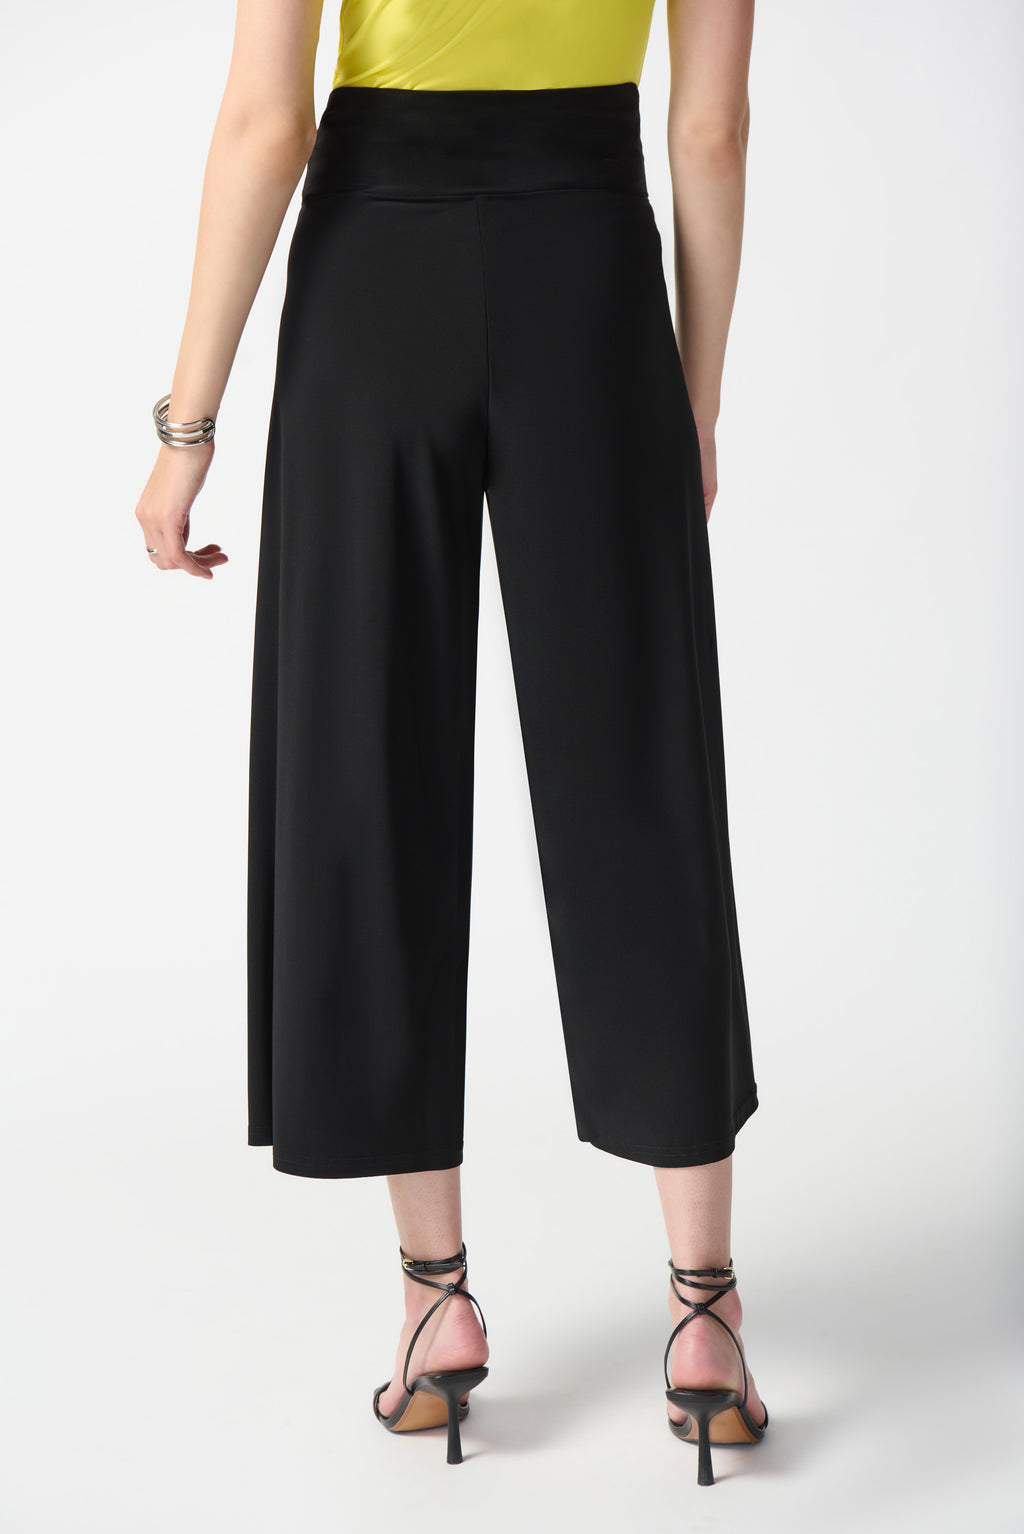 Joseph Ribkoff Black Pull-On Culotte Pants Style 242026